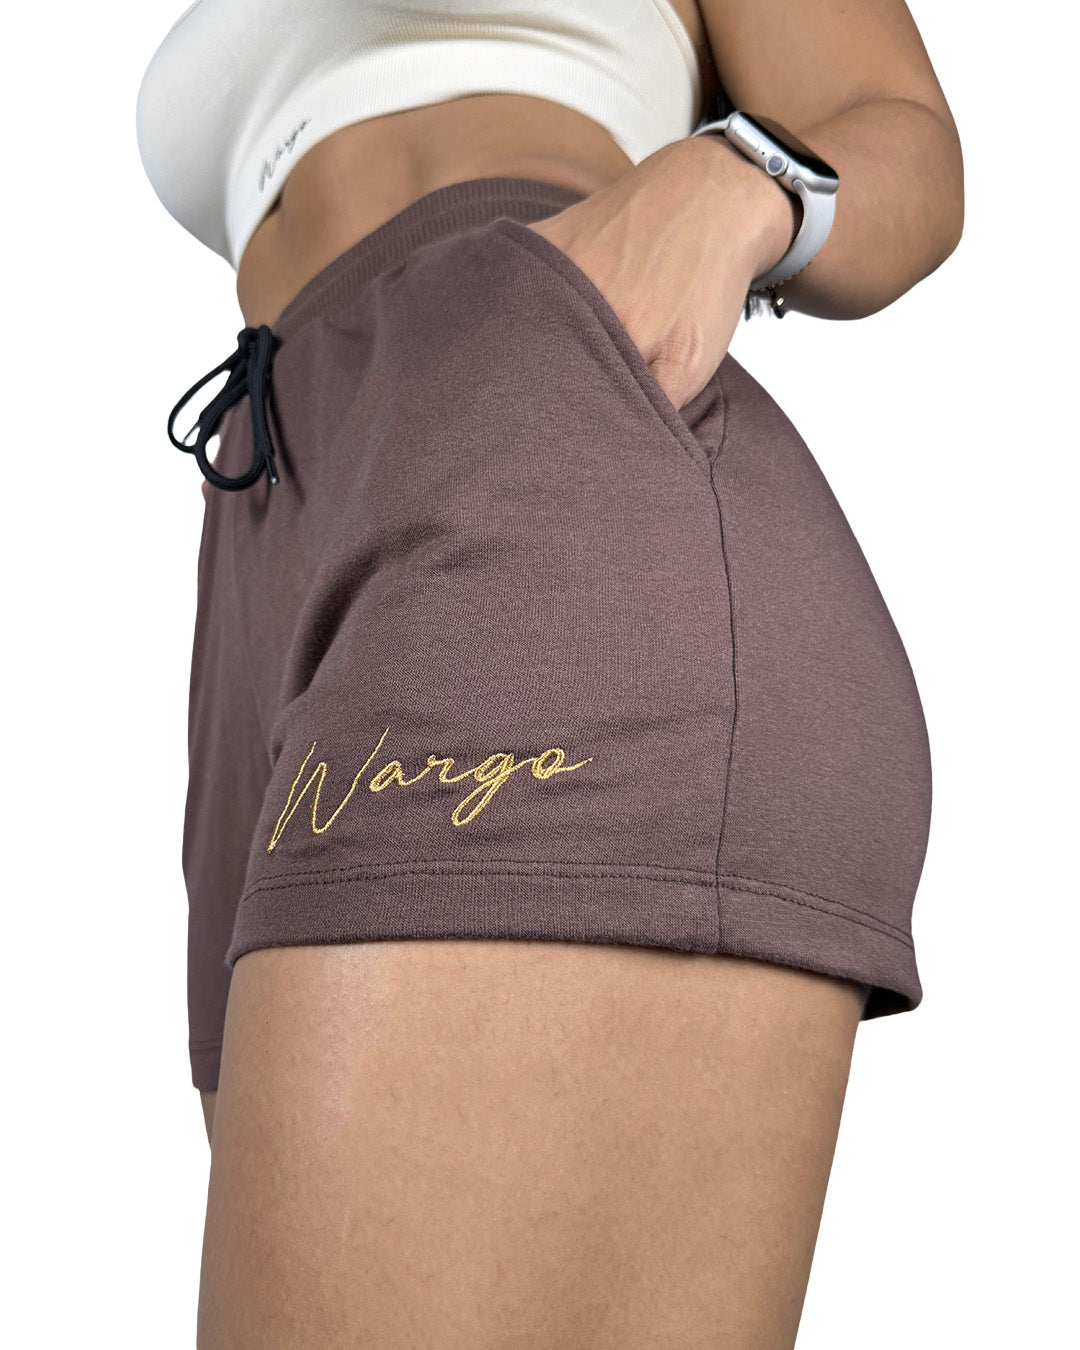 Wargo Signature Womens Shorts